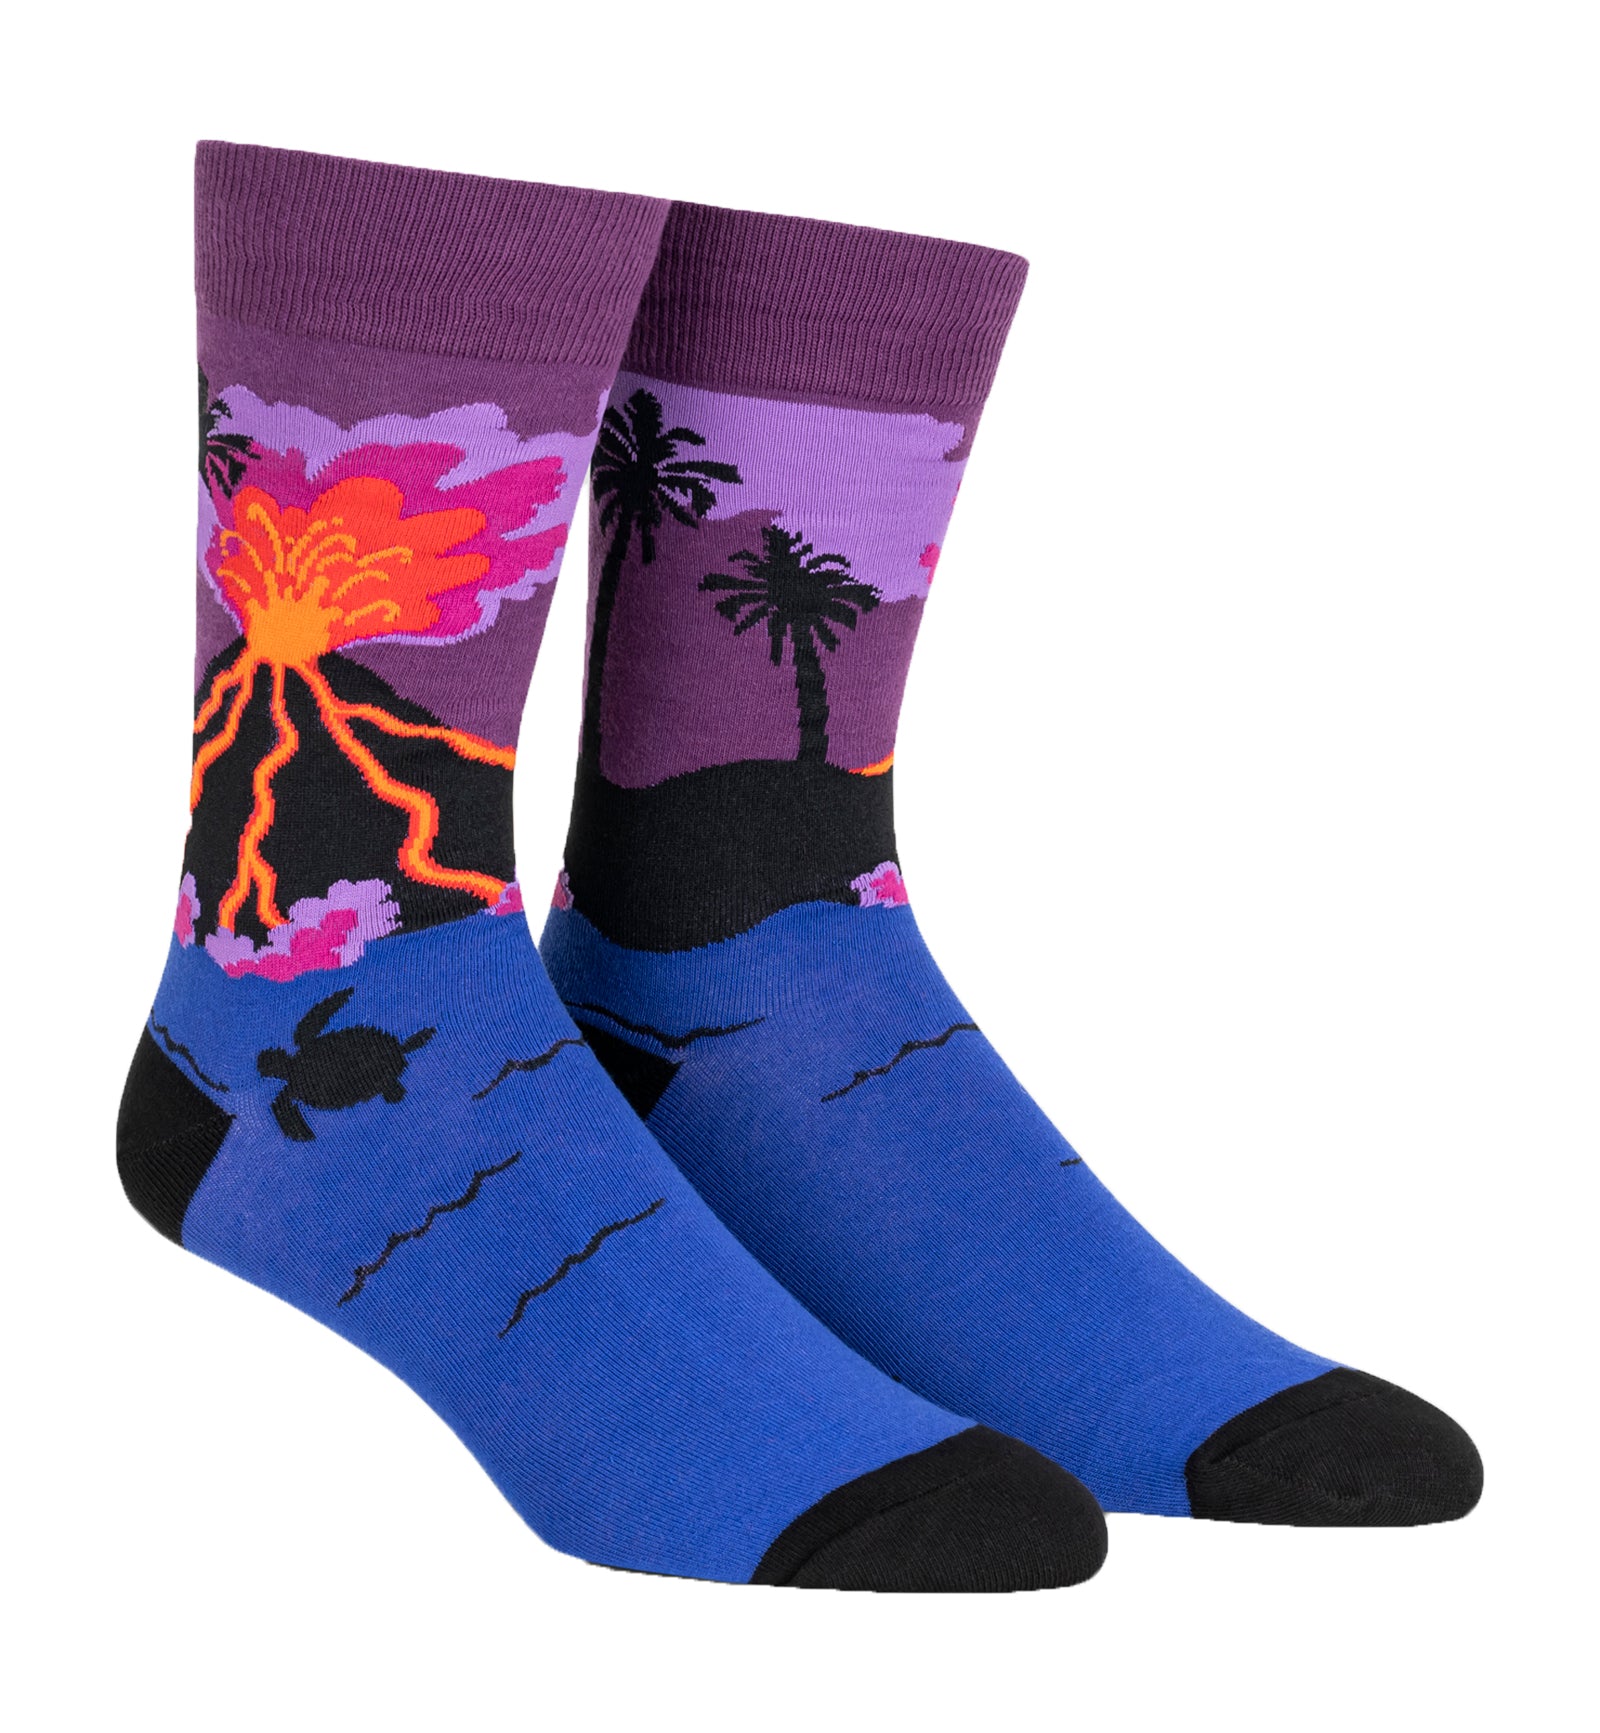 SOCK it to me Men's Crew Socks (MEF0633),Volcanoes - Volcanoes,One Size